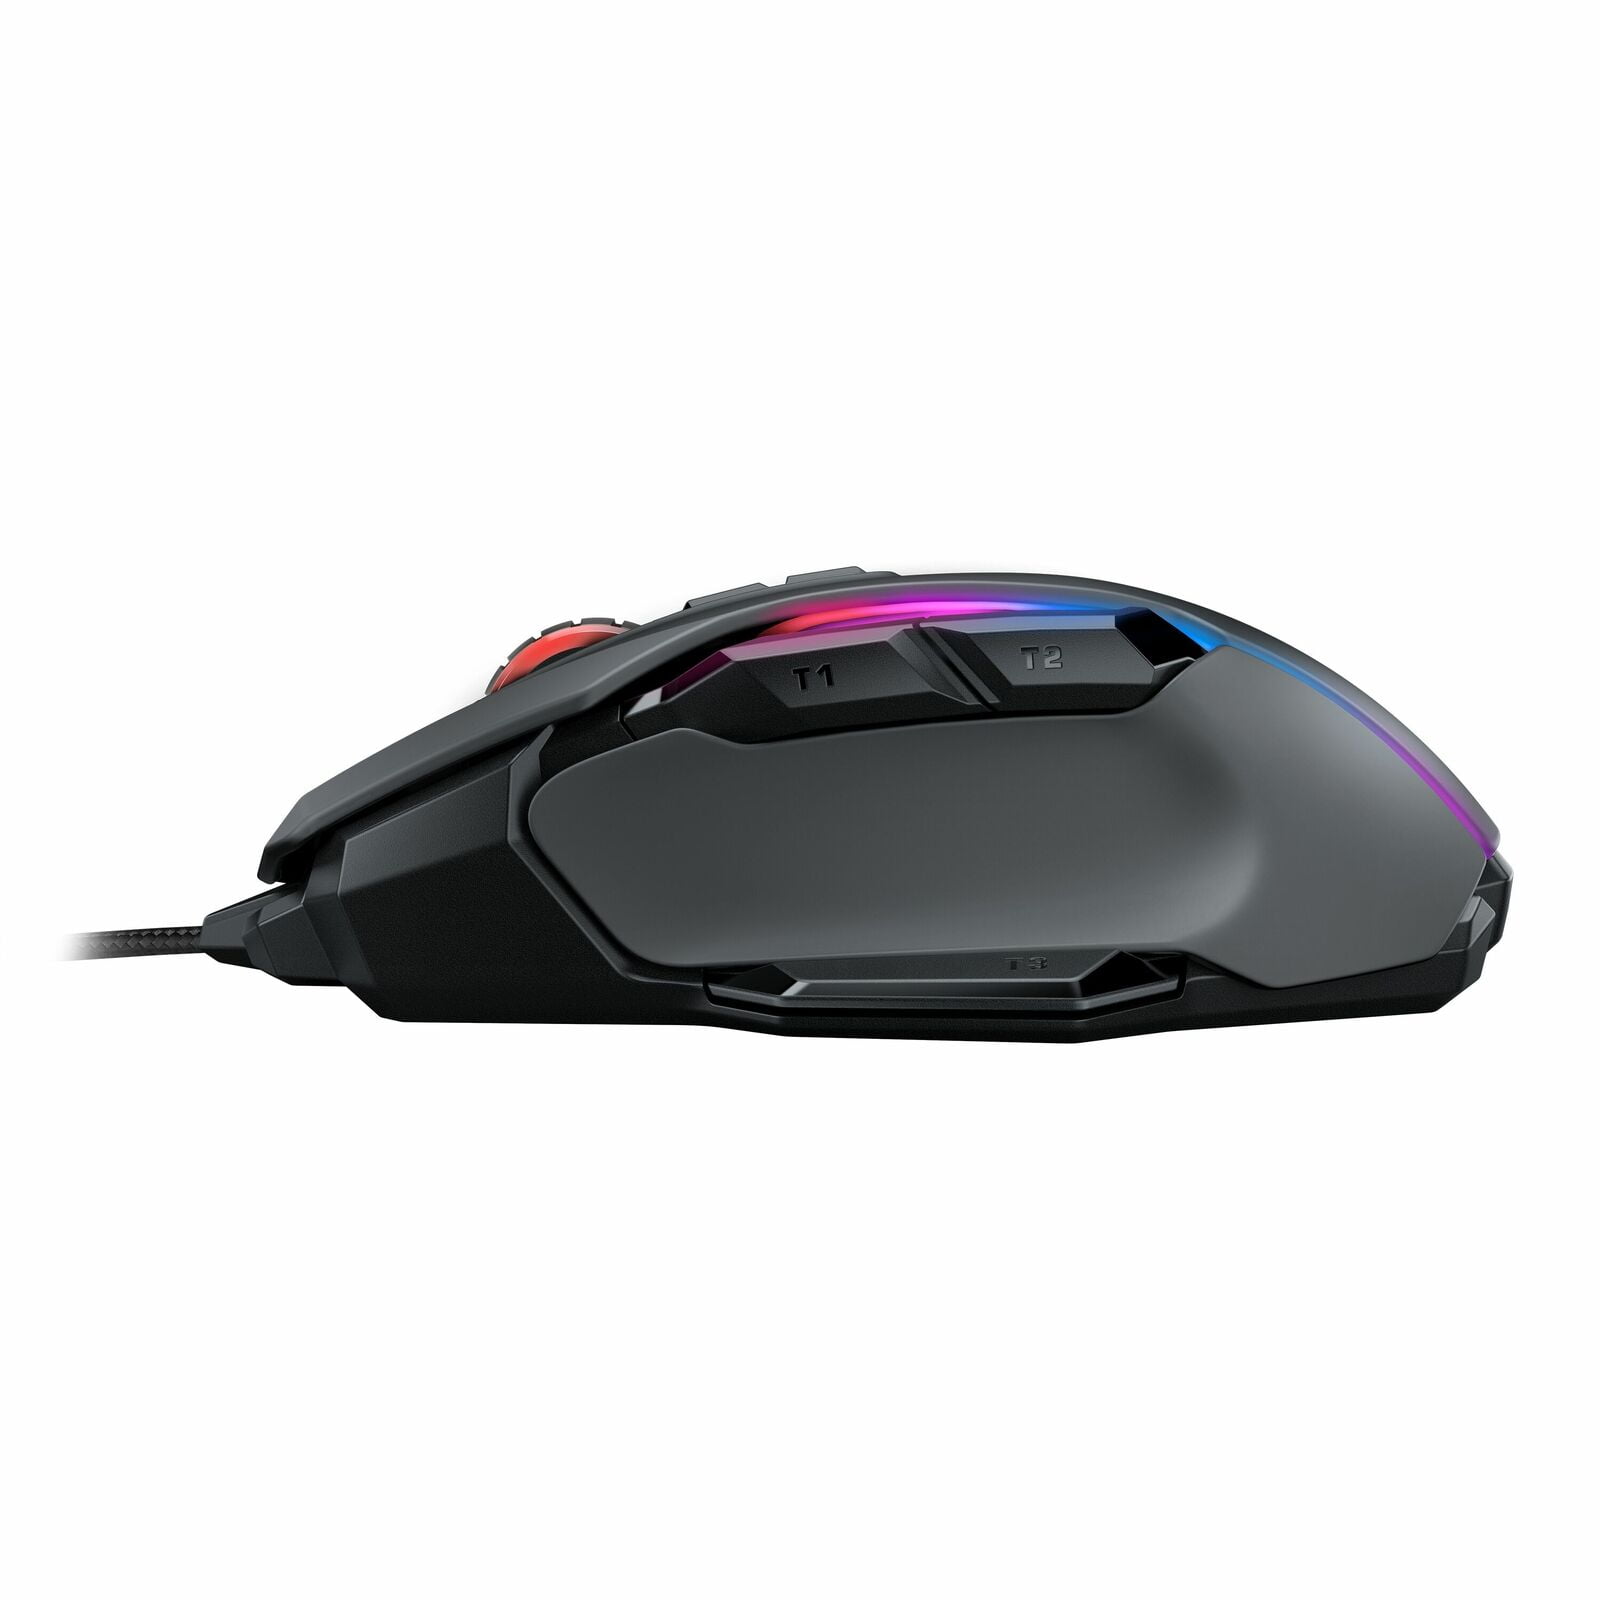 Roccat Roc 11 0 Bk Kone Aimo Remastered Rgba Smart Customization Gaming Mouse Black Walmart Com Walmart Com